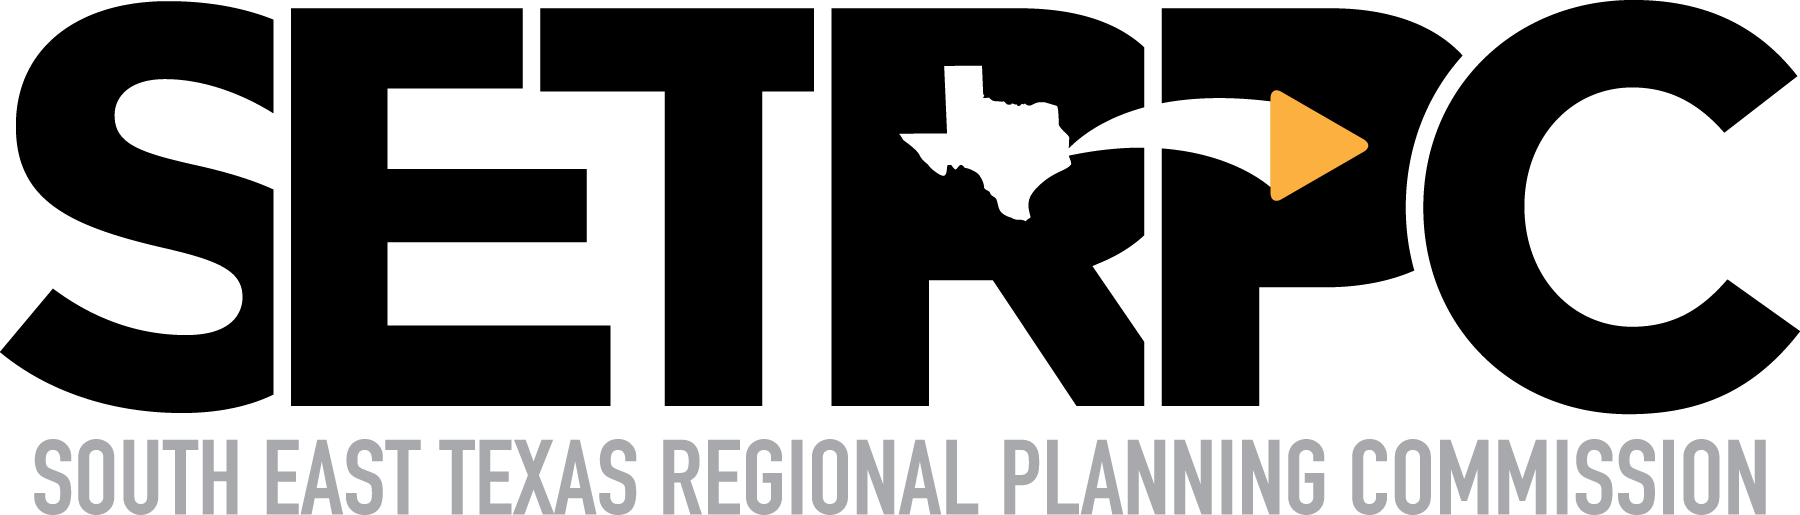 Web TV Logo - setrpc-logo-web-tv - Texas Association of Regional Councils